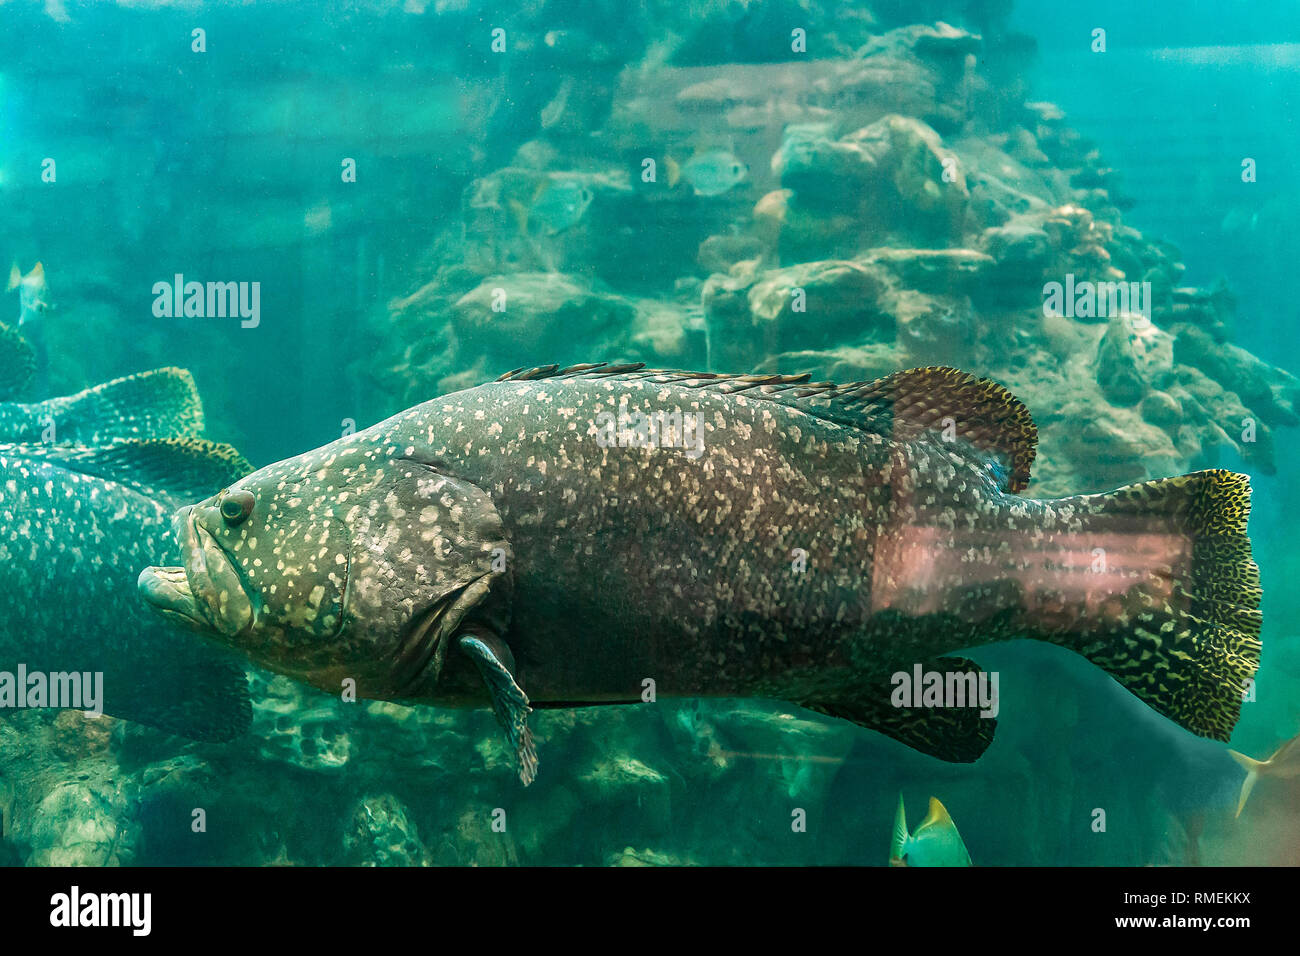 Large fish Giant grouper swimming in aquarium. Epinephelus lanceolatus, common brindlebass, brown spotted cod, or bumblebee grouper Stock Photo